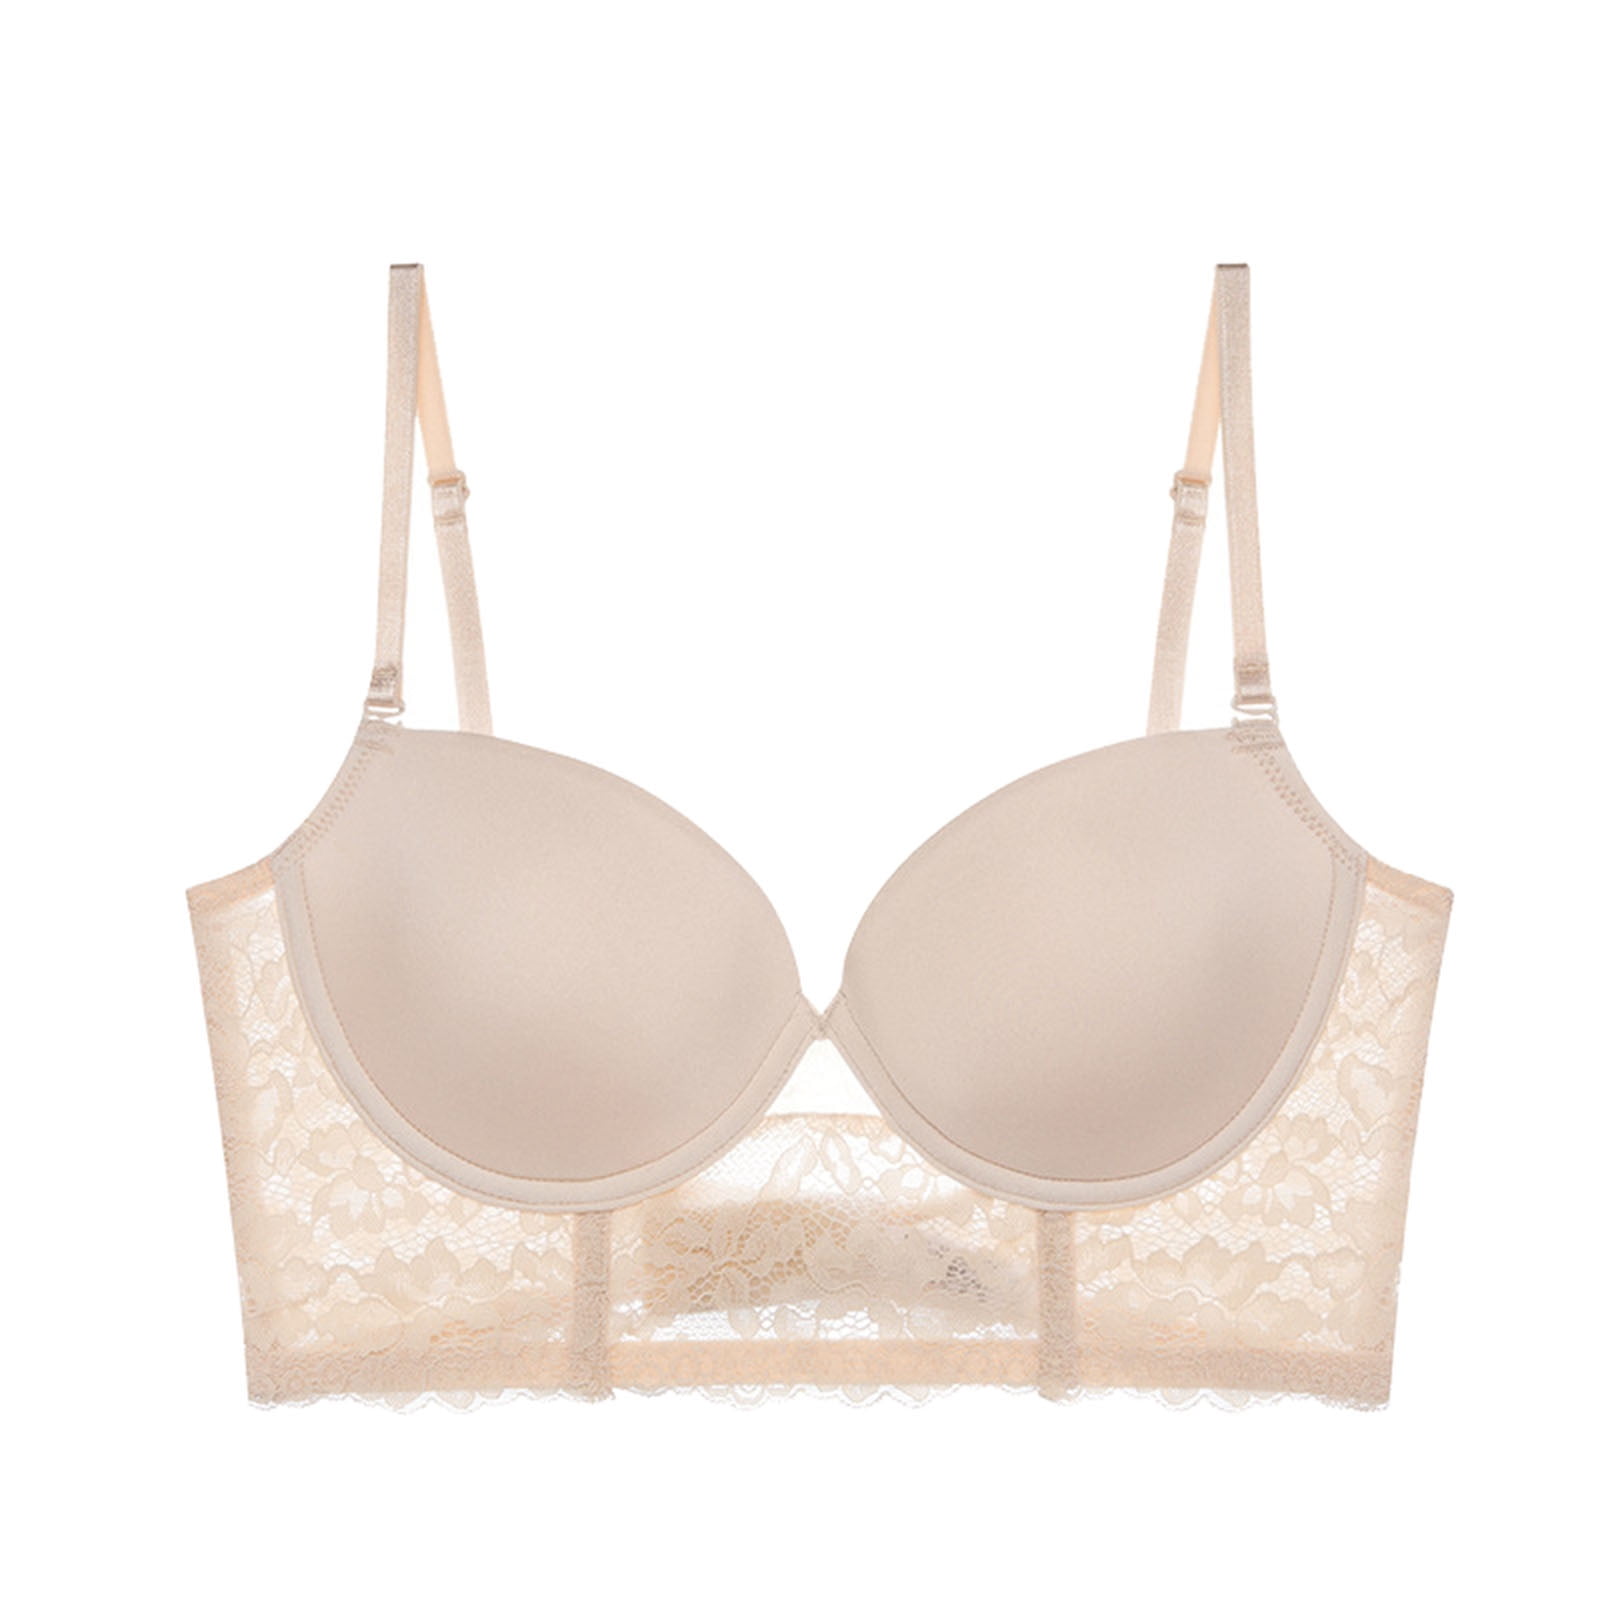 Buy Alion Women's Sheer Bra See-Through Mesh Transparent Everyday Bra 40B  White at